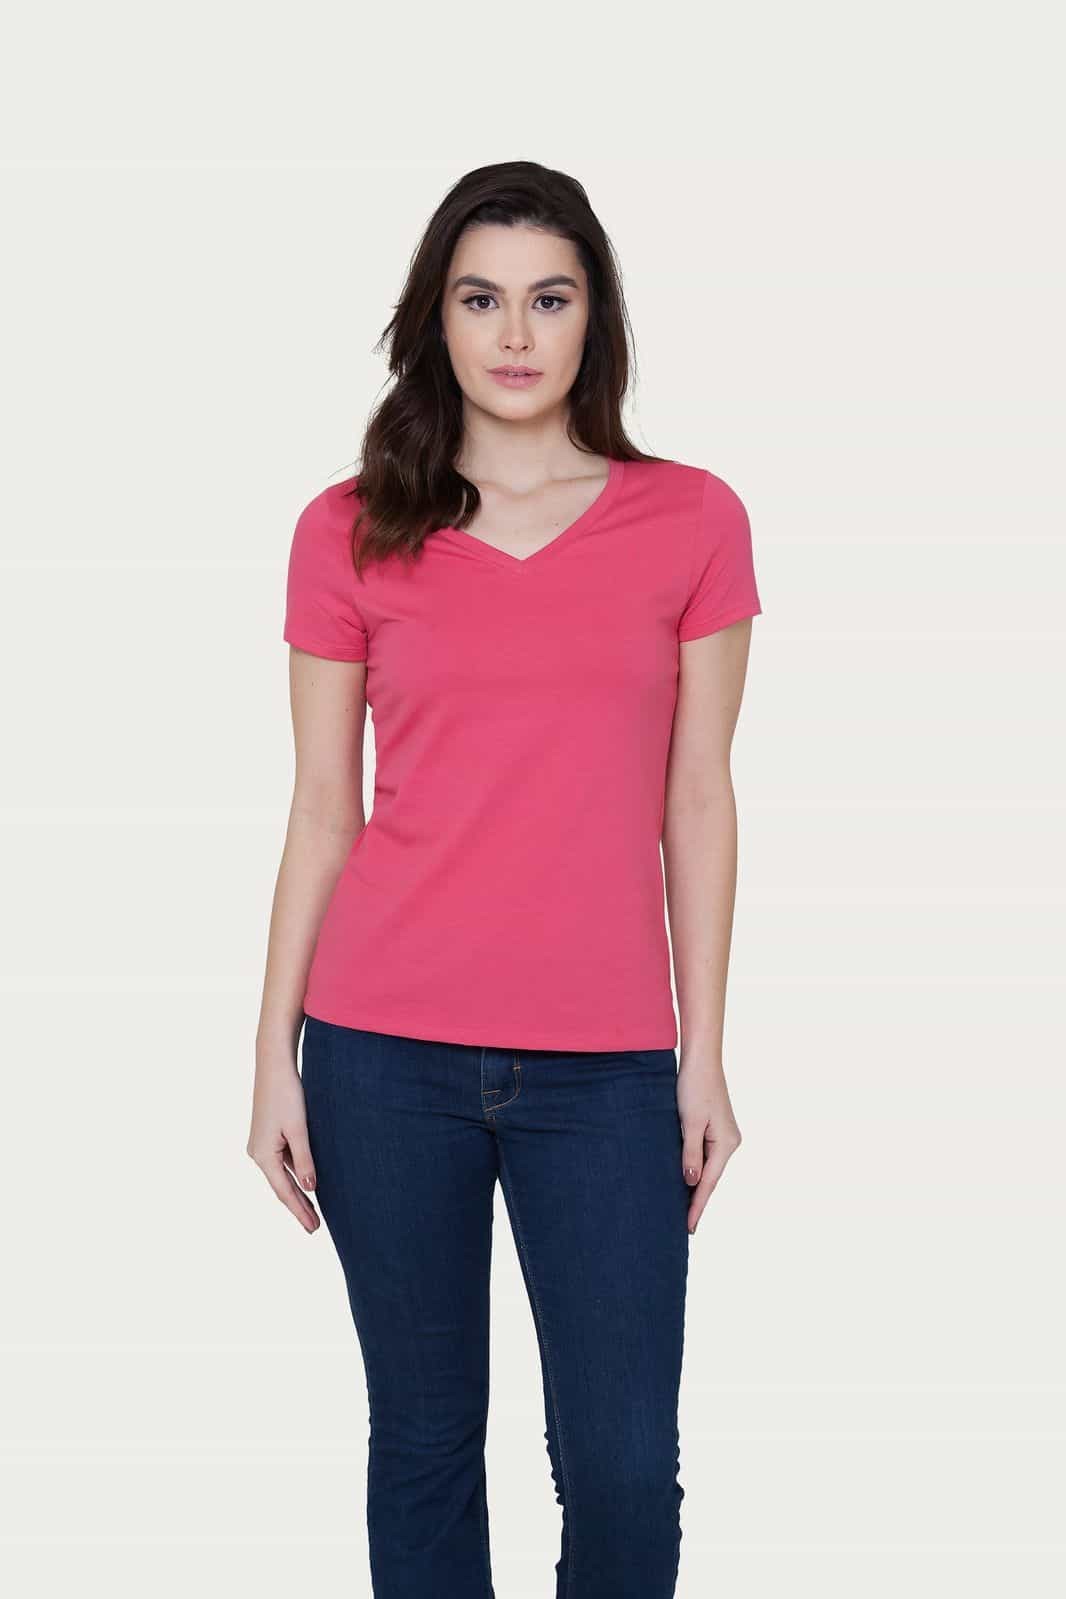 Camiseta Básica Feminina Algodão Premium Slim Fit Decote V Rosa